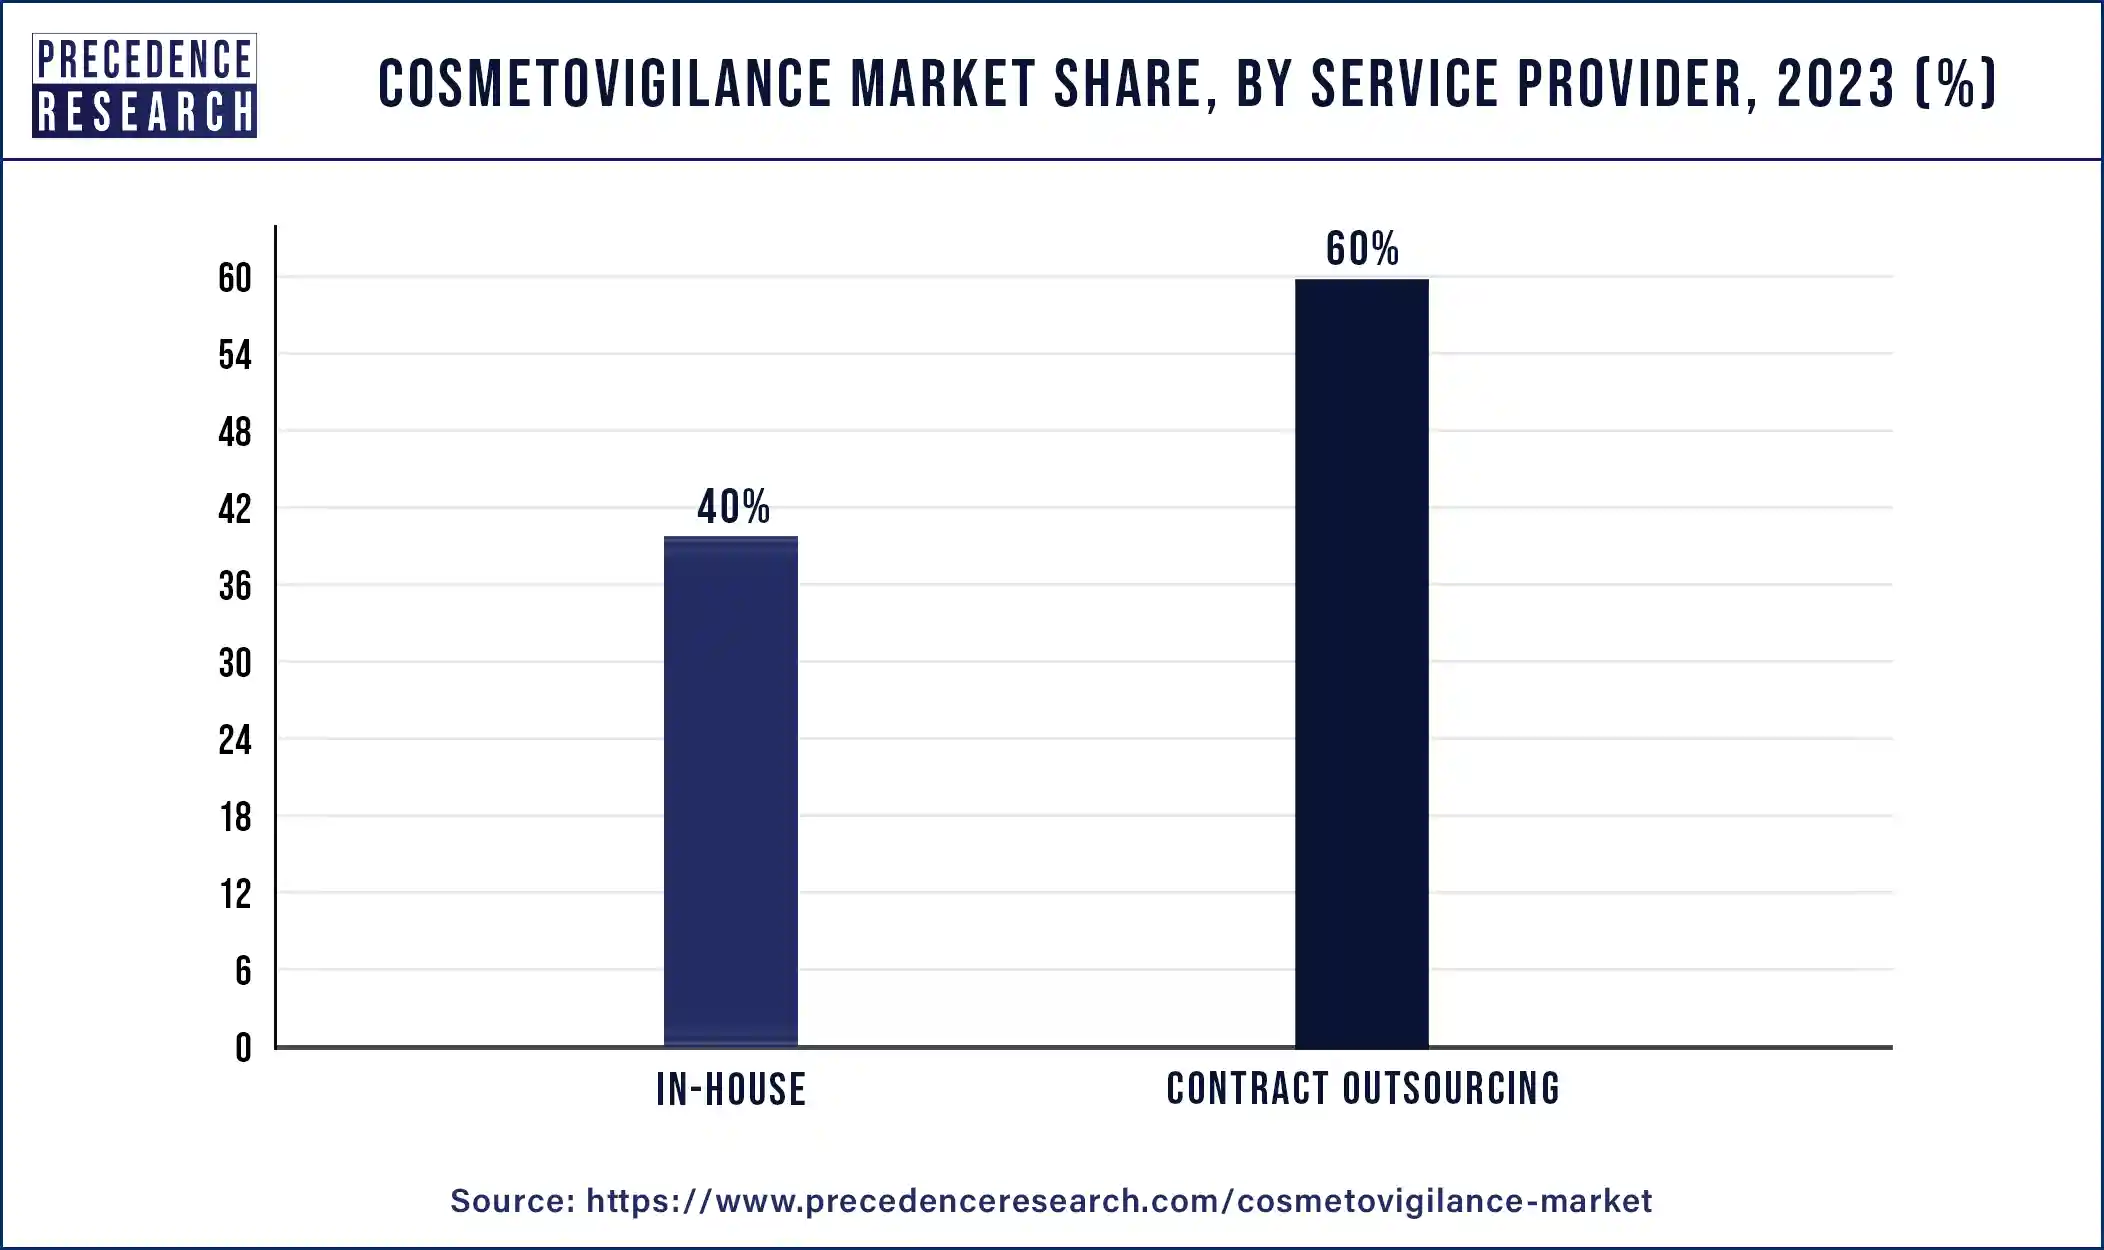 Cosmetovigilance Market Share, By Service Provider, 2023 (%)